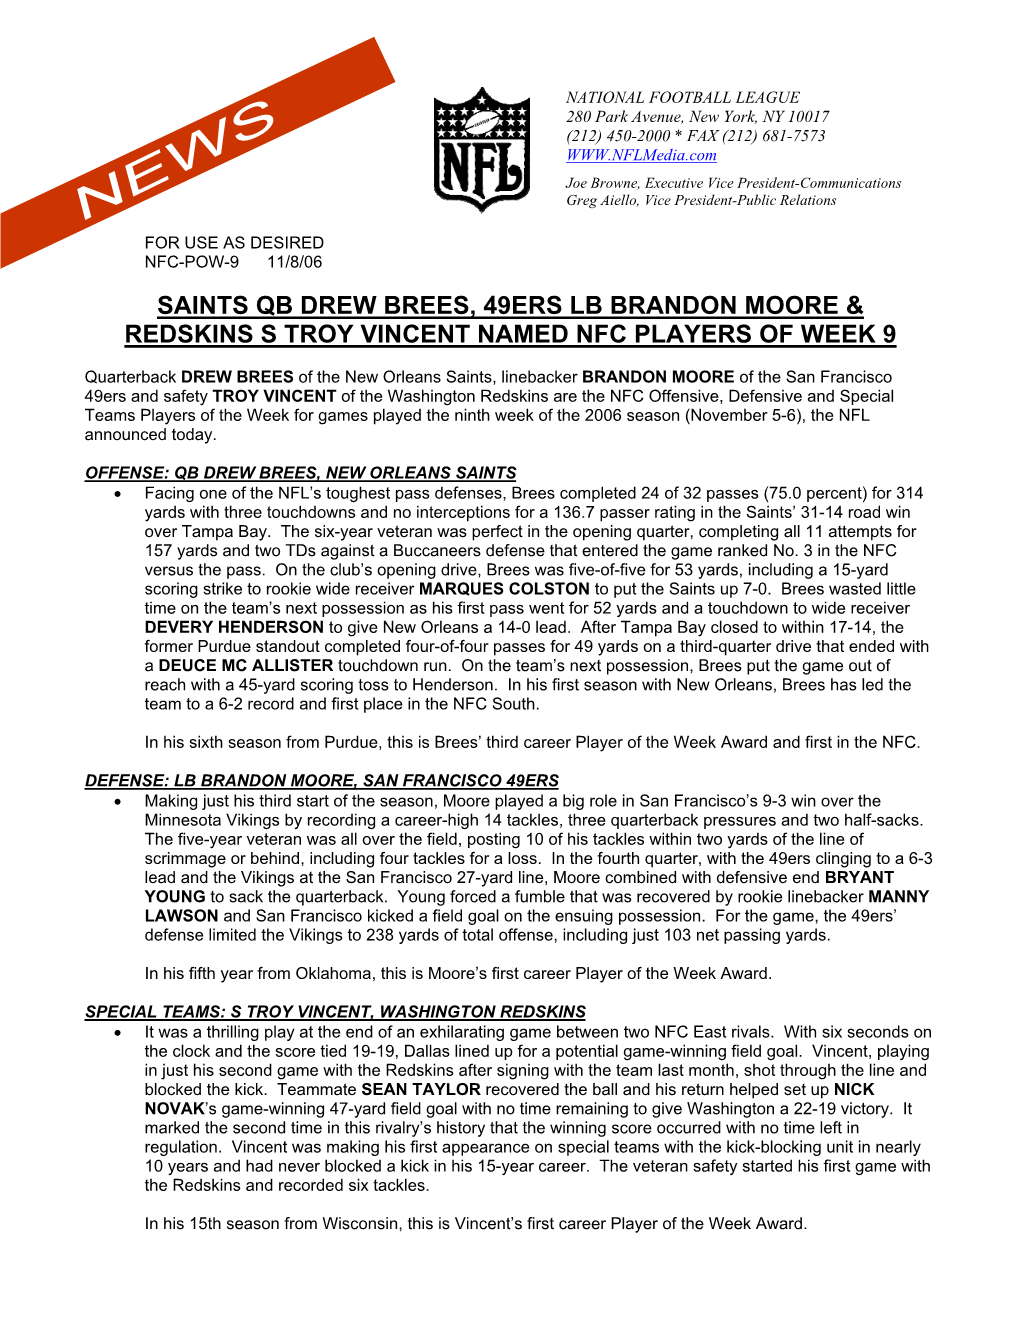 Saints Qb Drew Brees, 49Ers Lb Brandon Moore & Redskins S Troy Vincent Named Nfc Players of Week 9